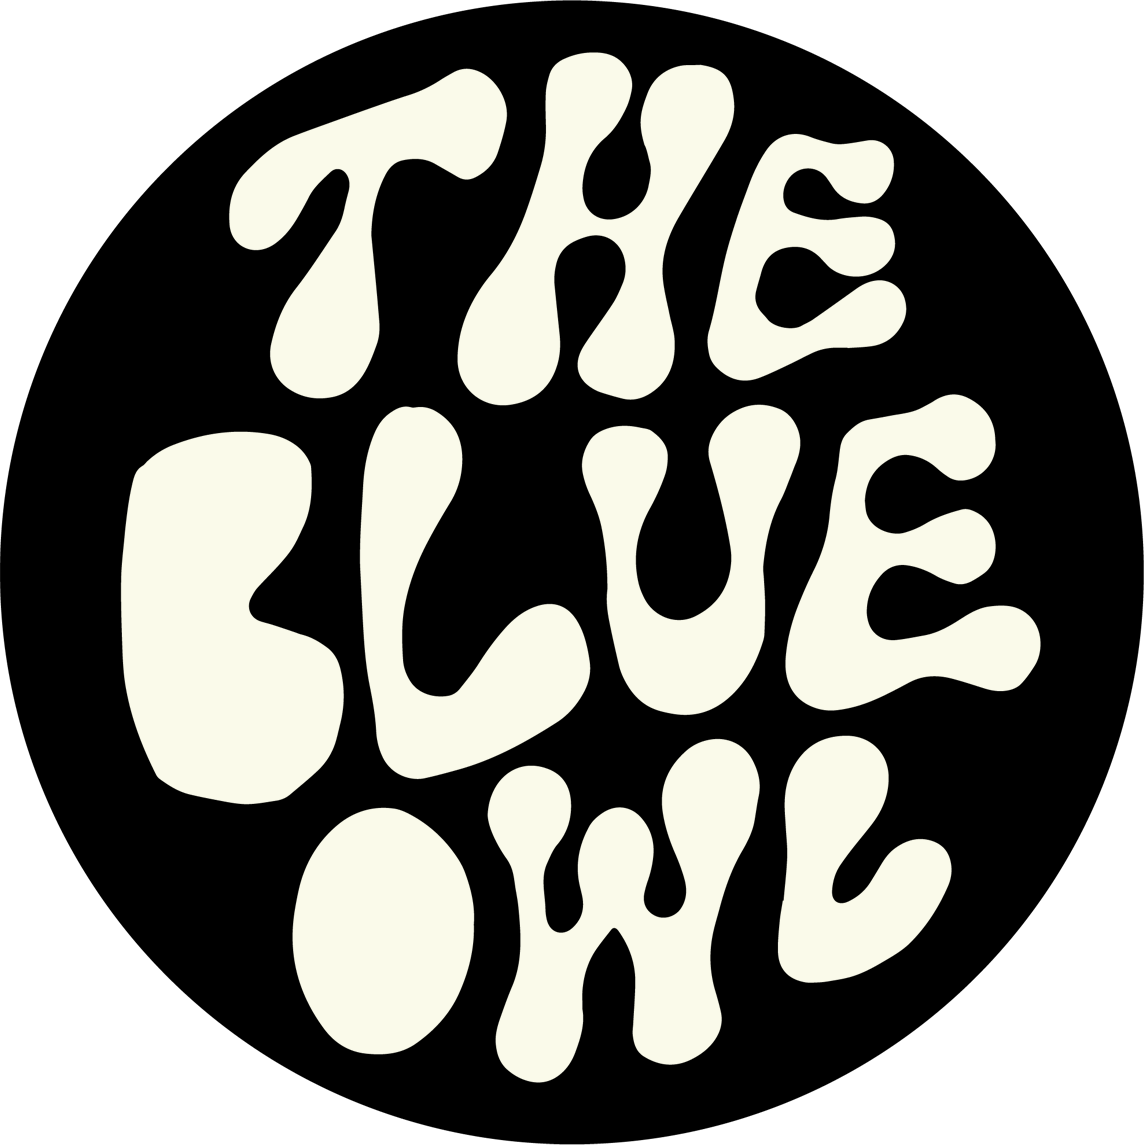 The Blue Owl